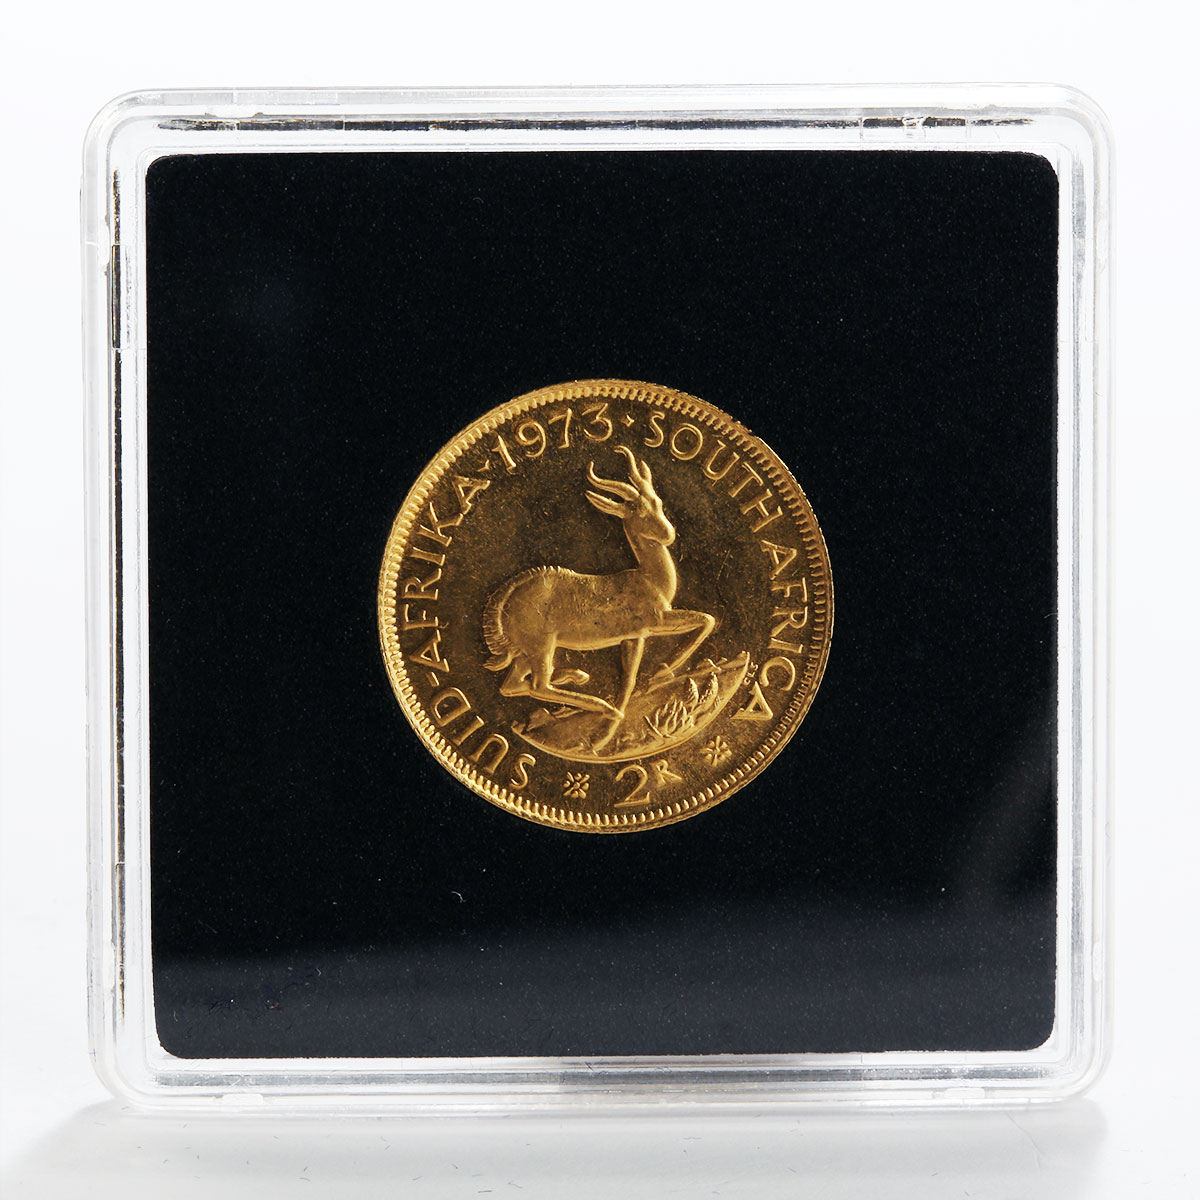 South Africa 2 rand Jan van Riebeeck Suid-Afrika Springbok gold coin 1973